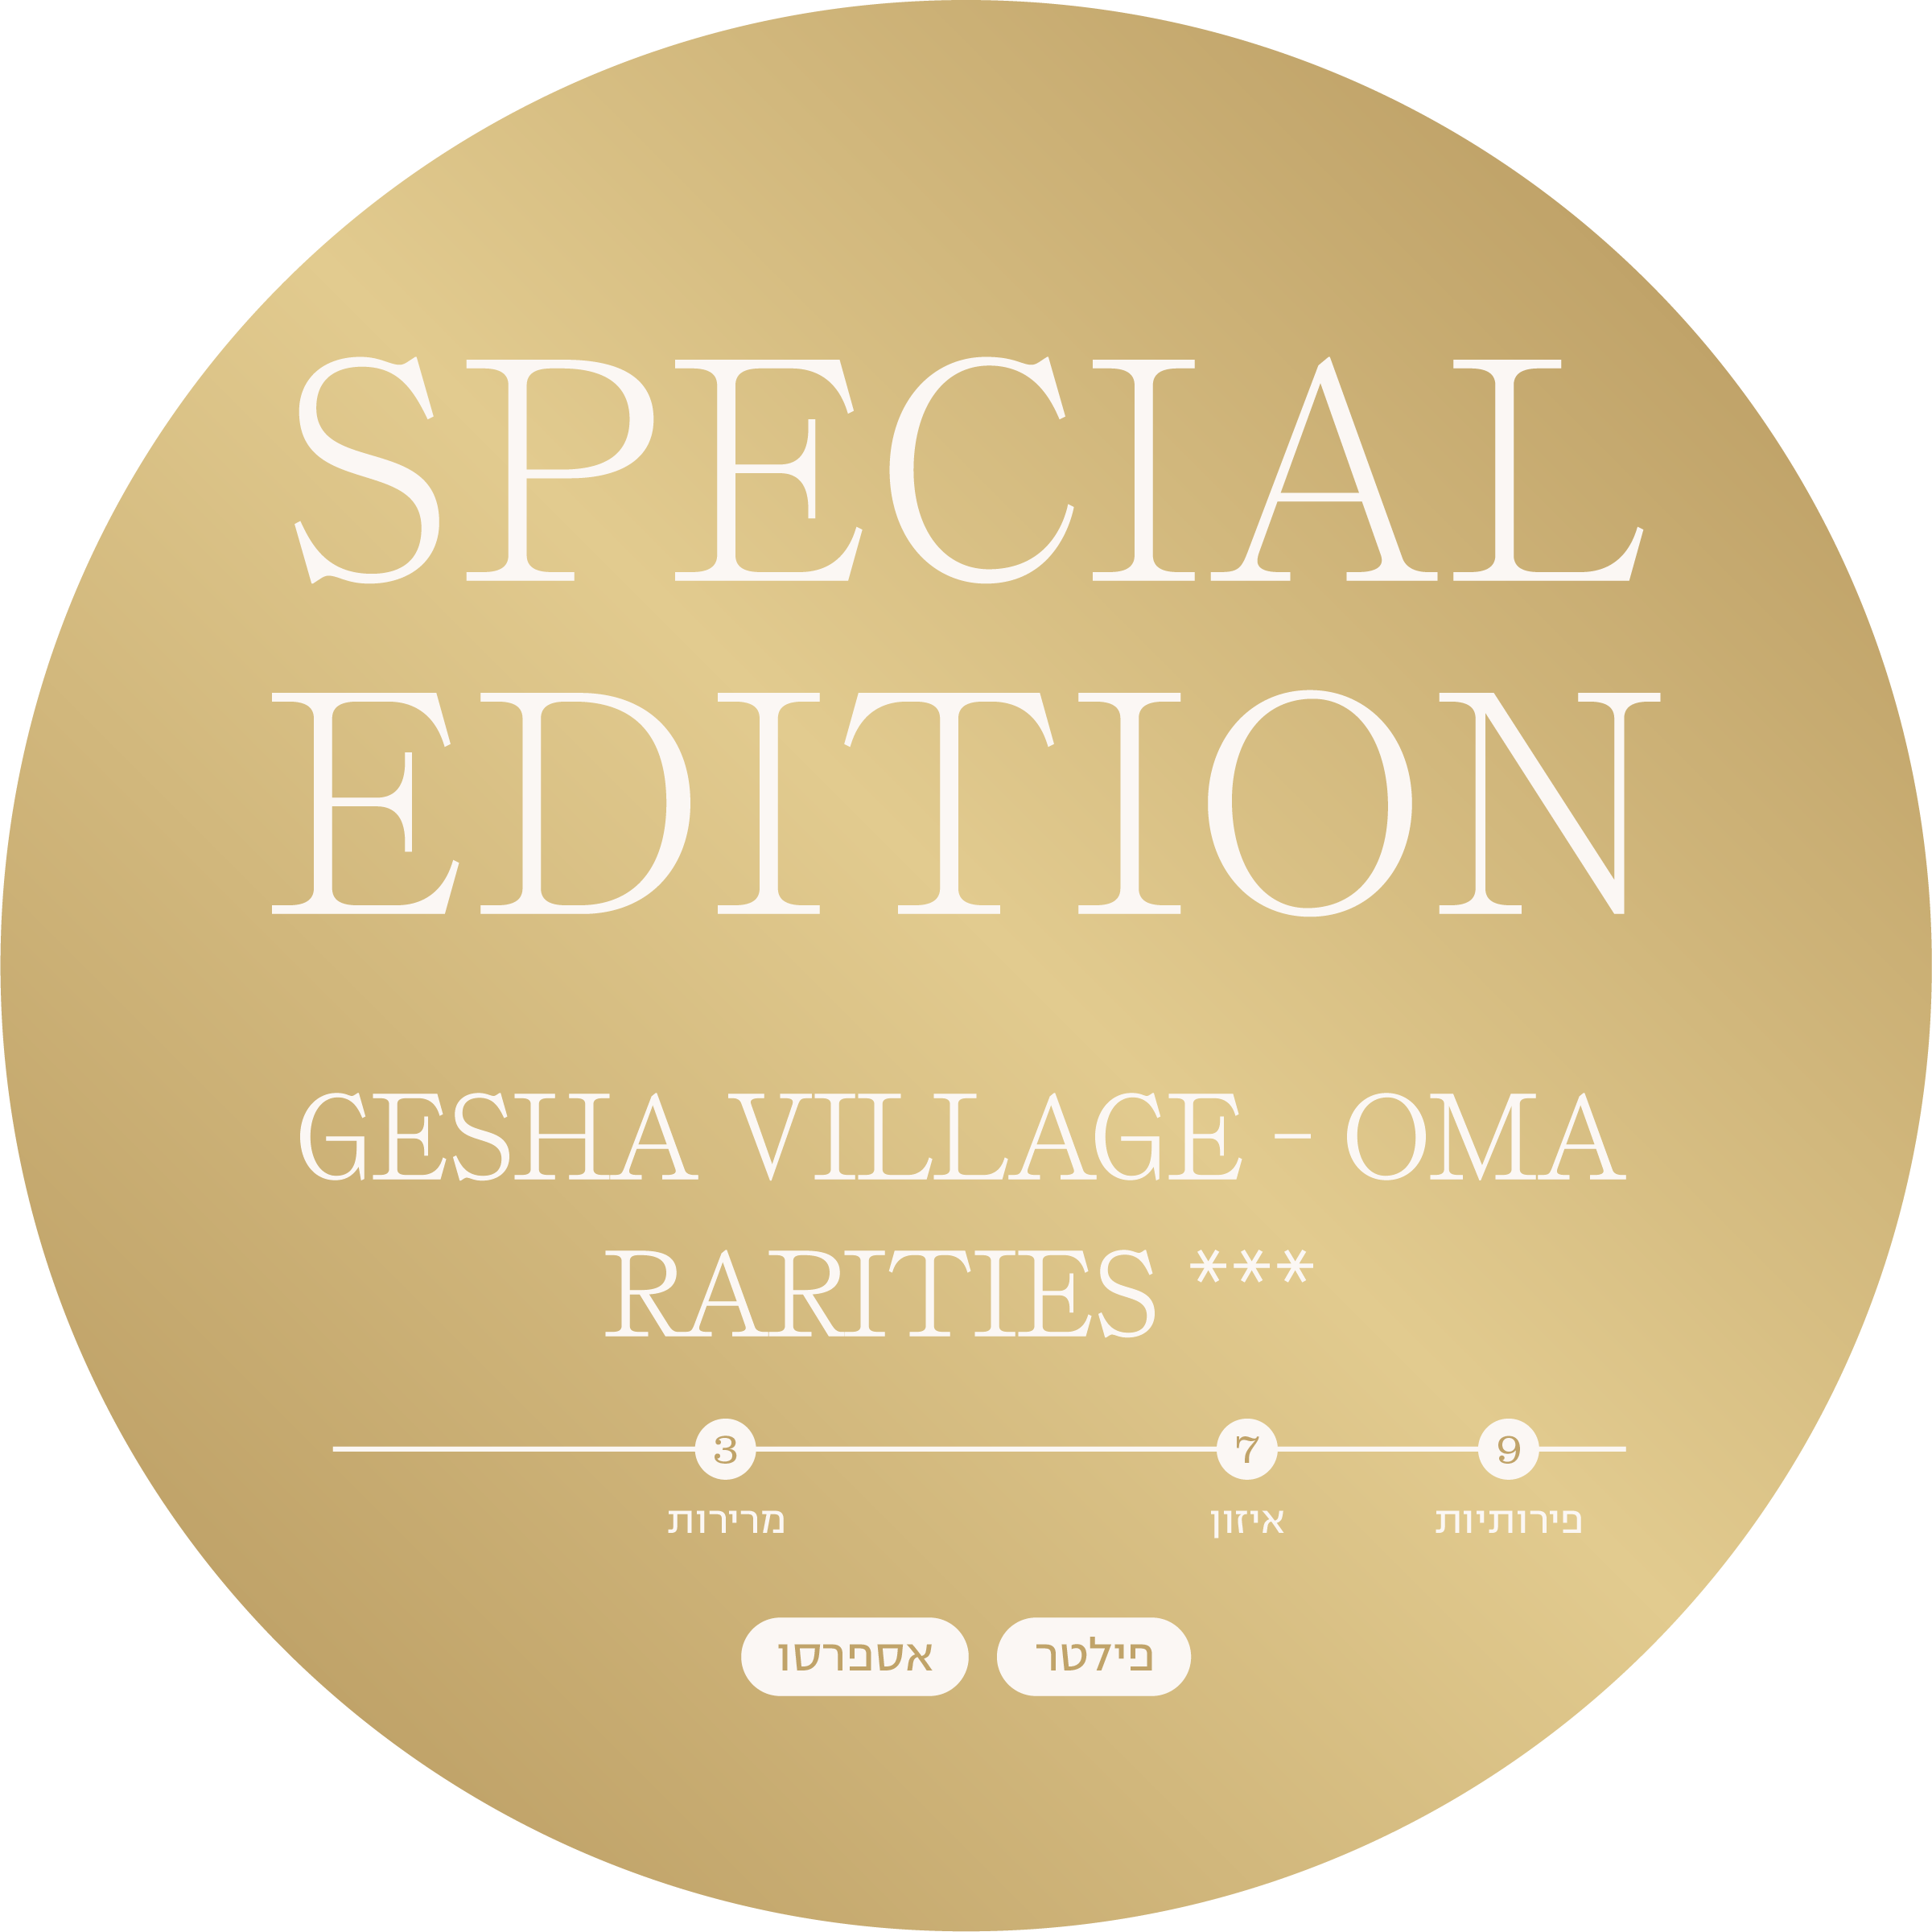 Gesha Village - OMA